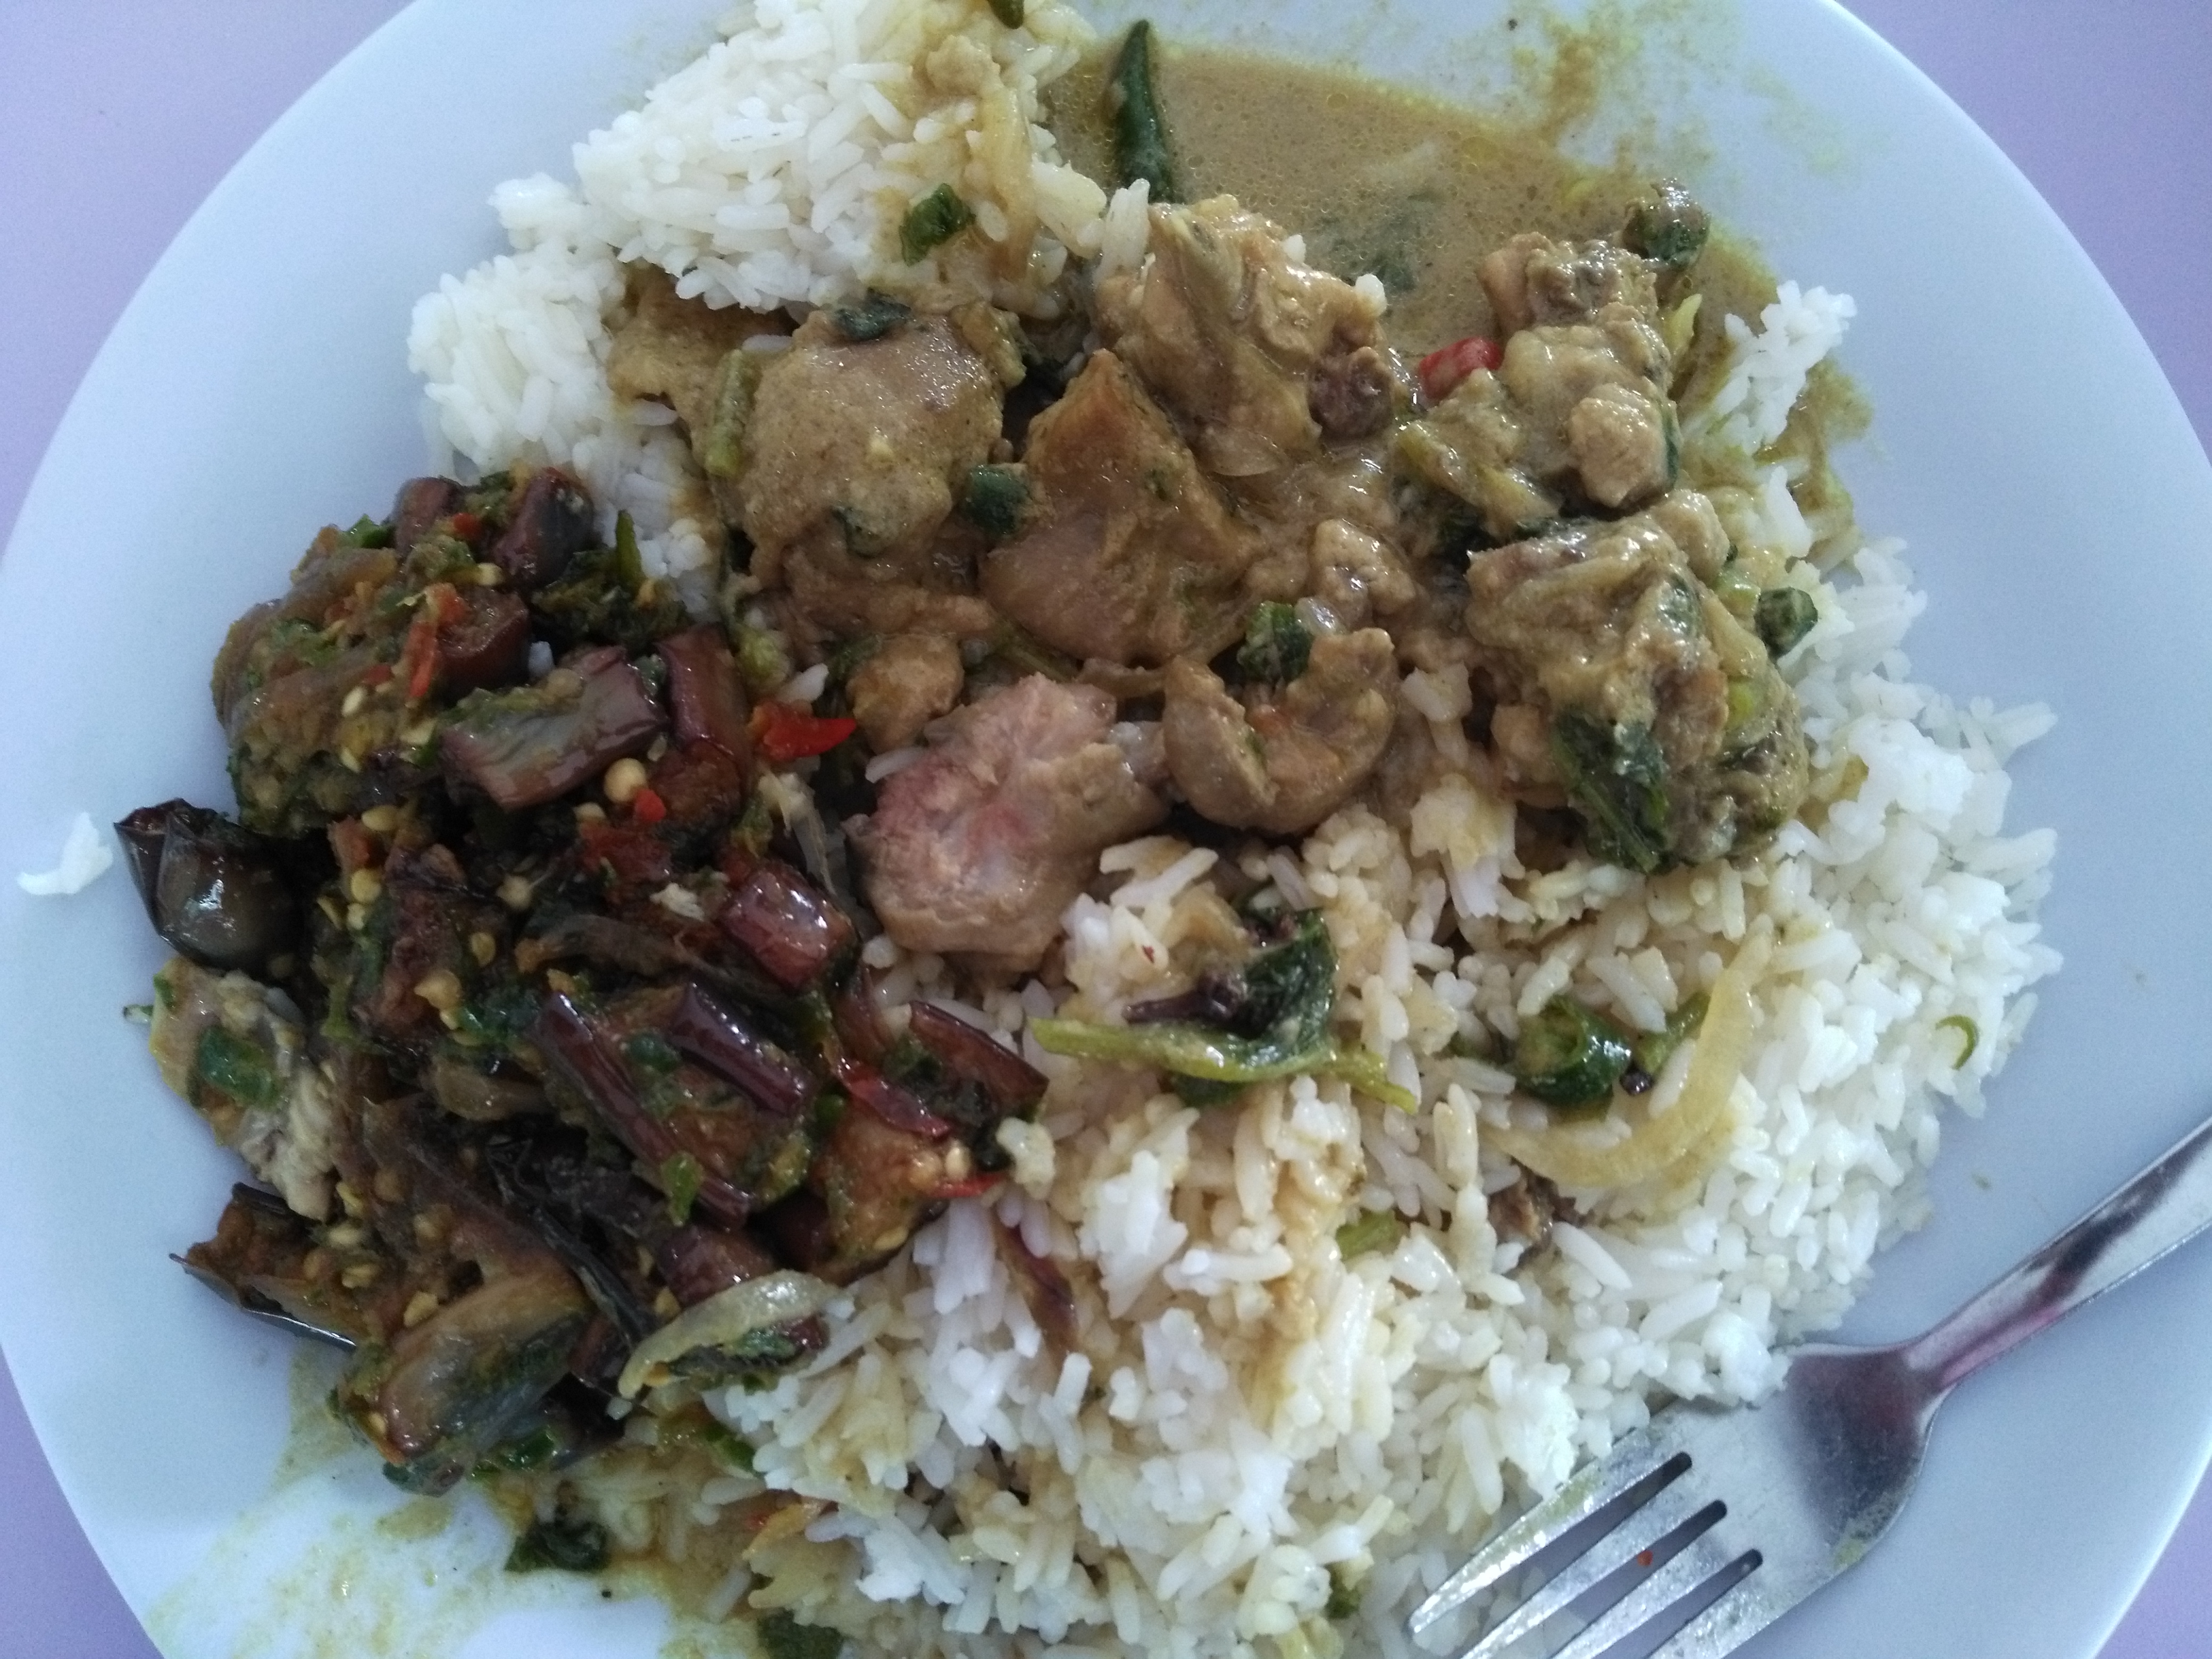 Chicken kurma, fried eggplant, and rice.